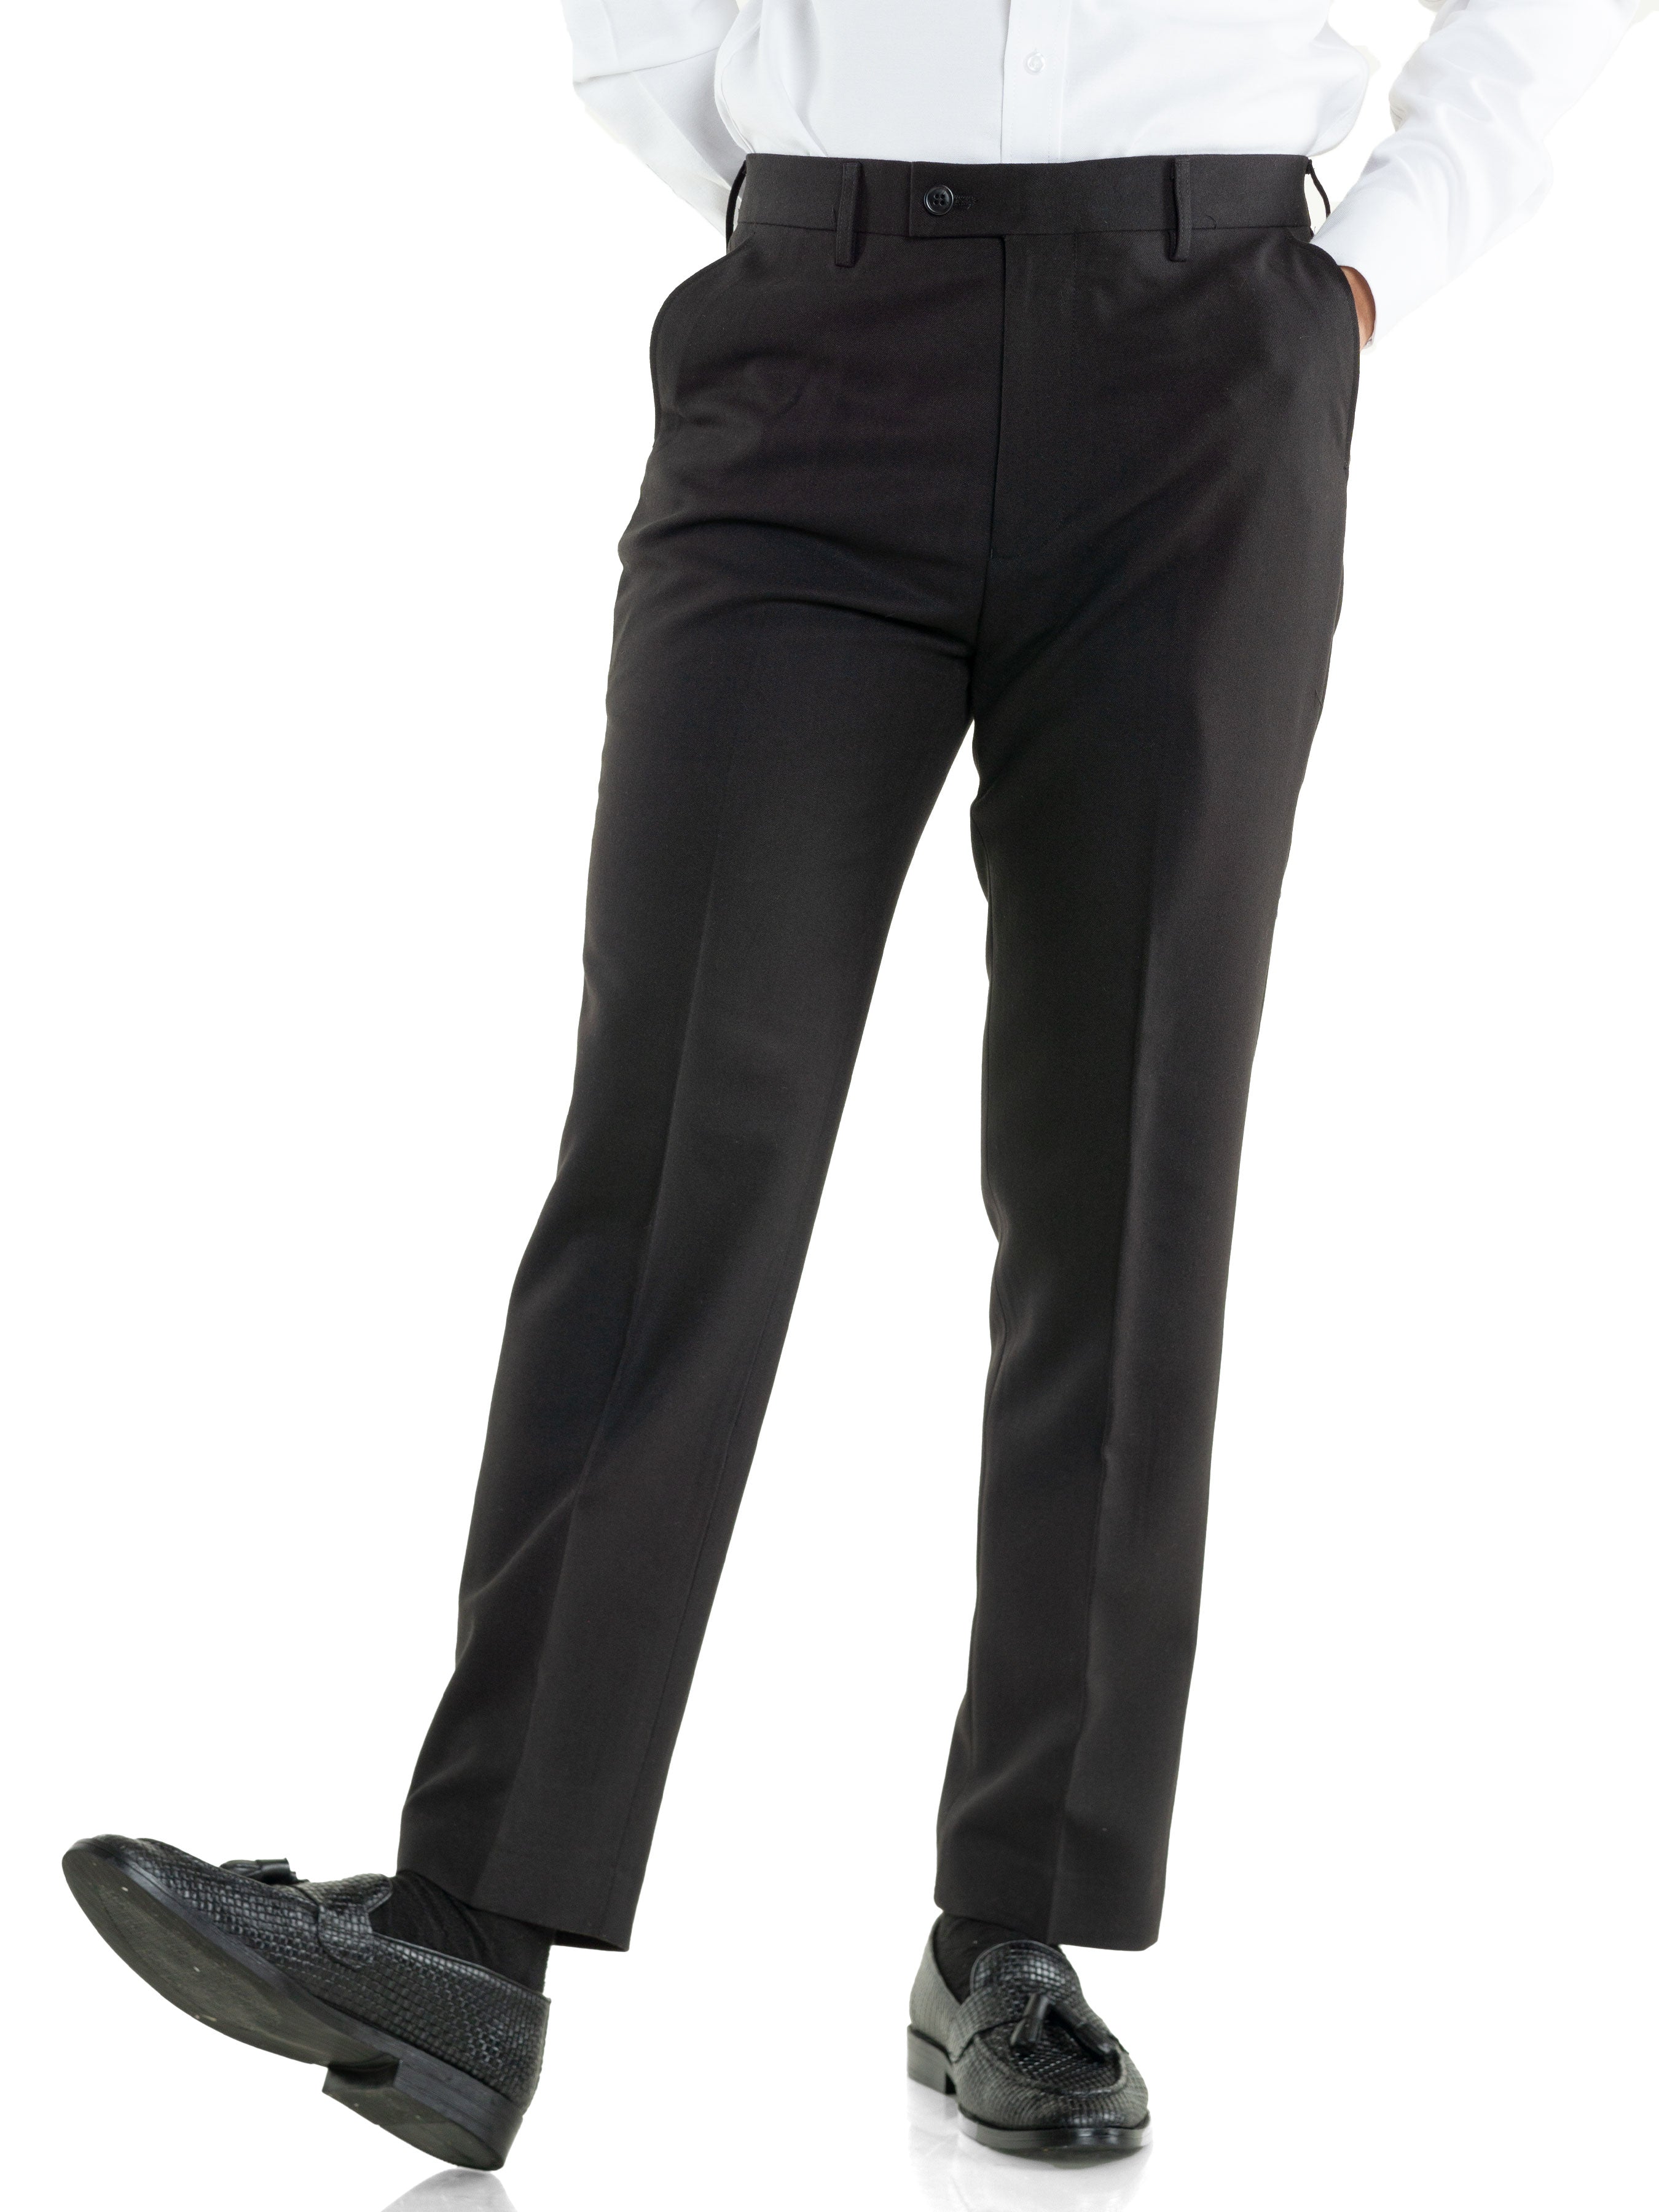 Buy Classic Work Wear Trouser With Bottom Slits For Women Online  Best  Prices in India  Uniform Bucket  UNIFORM BUCKET